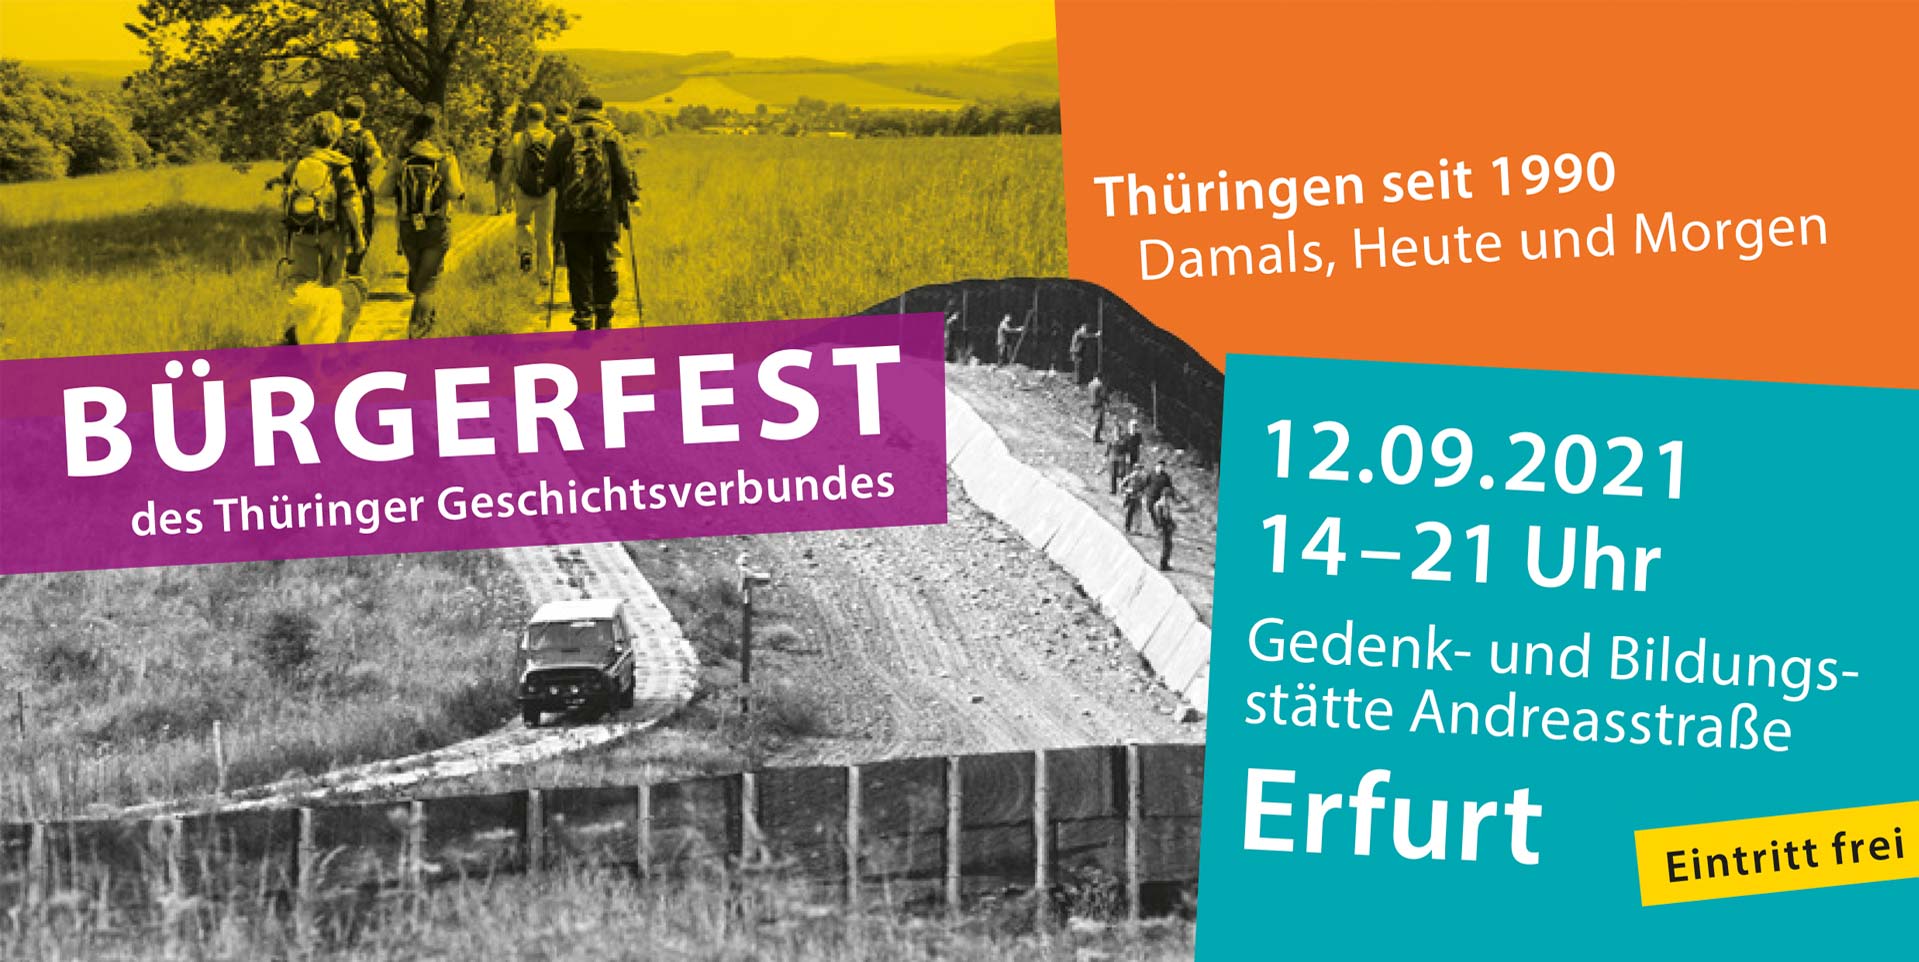 Bürgerfest 2021 - Buergerfest 2021 Förderverein Gedenkstätte Andreasstraße